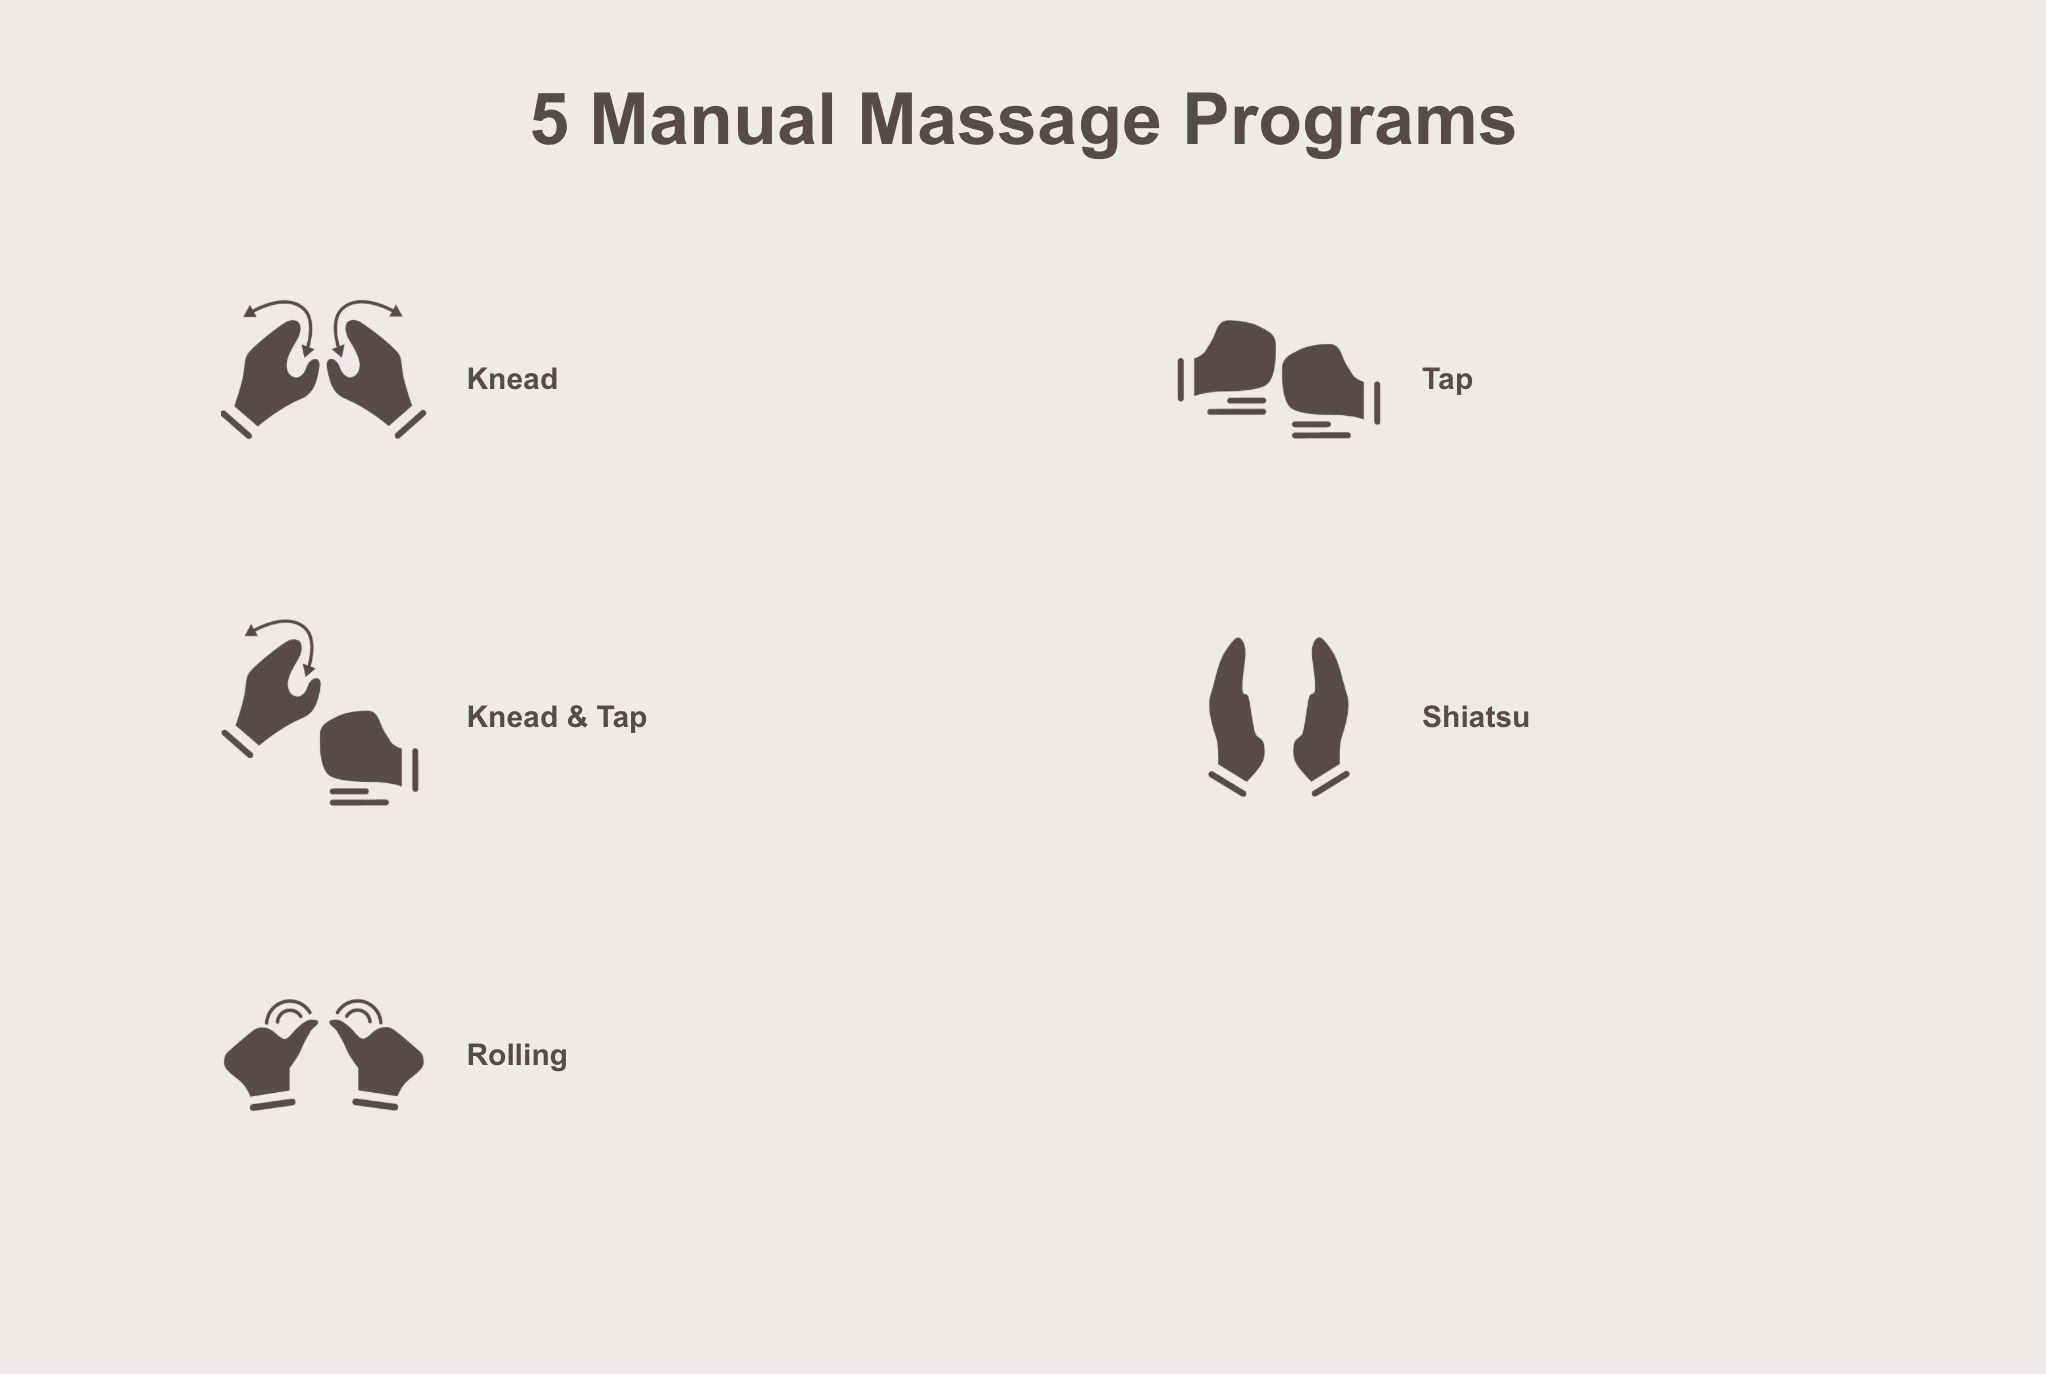 5 Manual Massage Programs